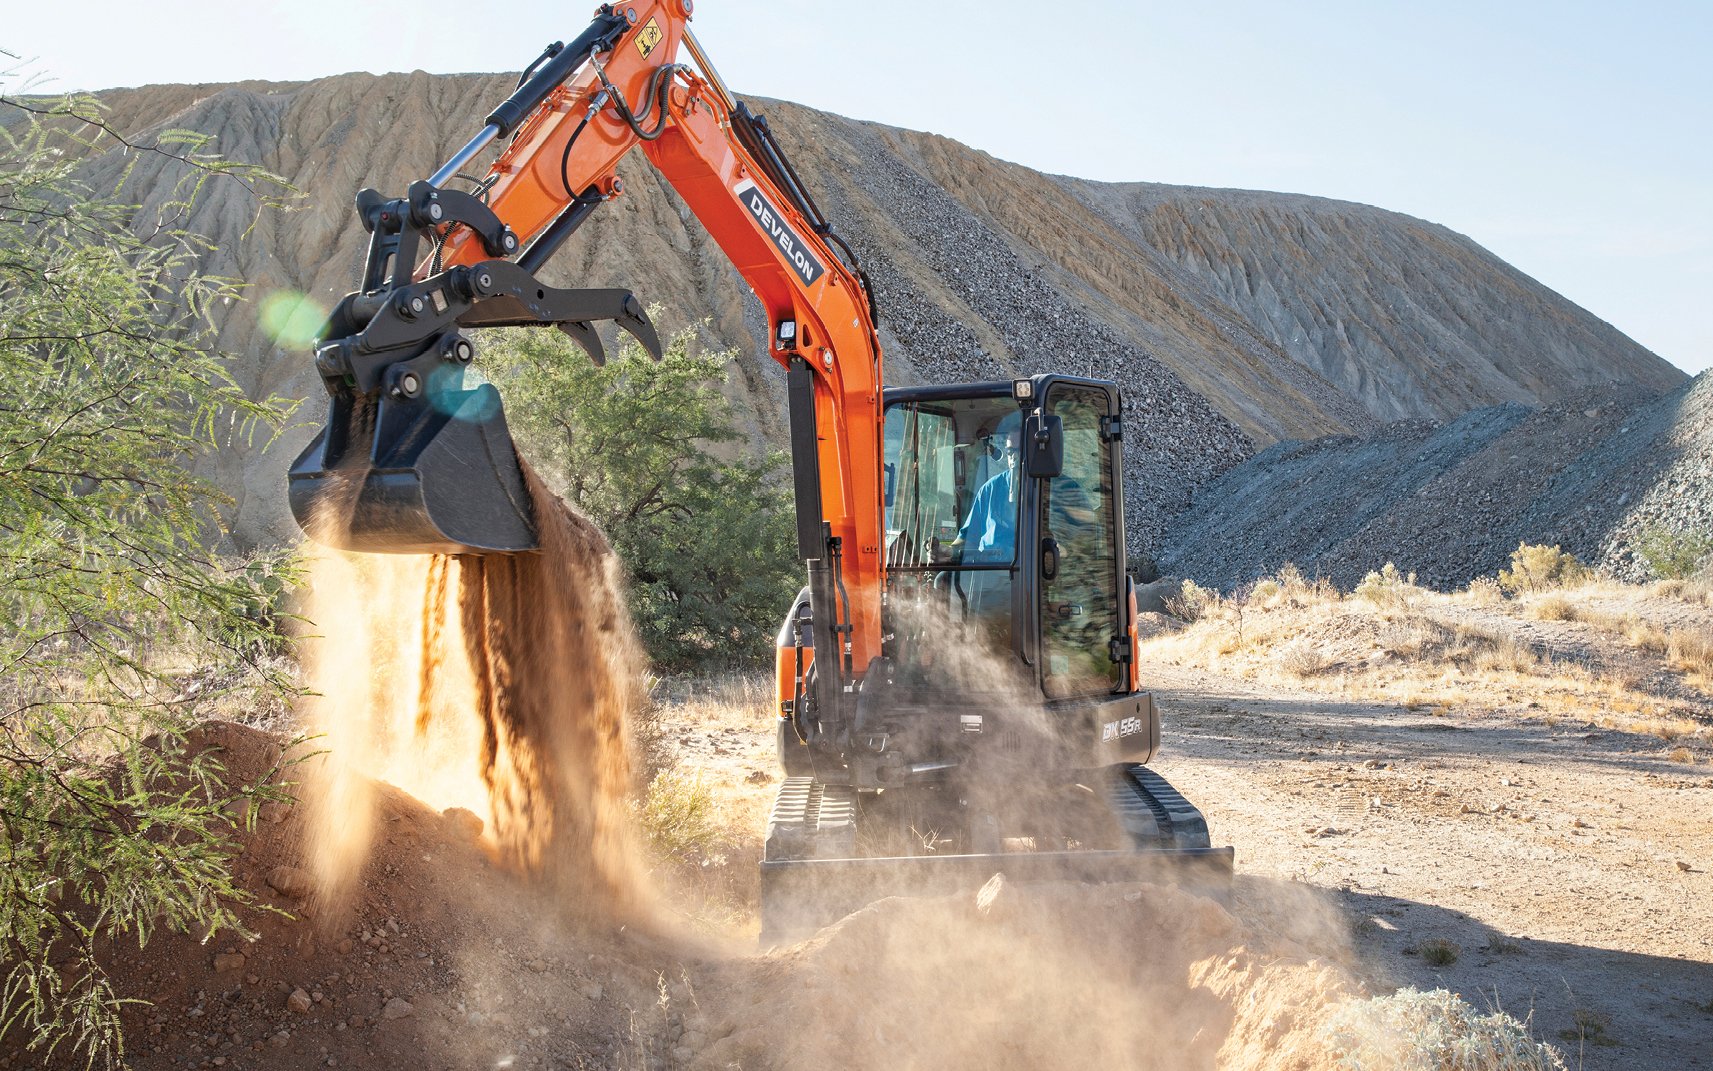  A DEVELON mini excavator digs on a job site.